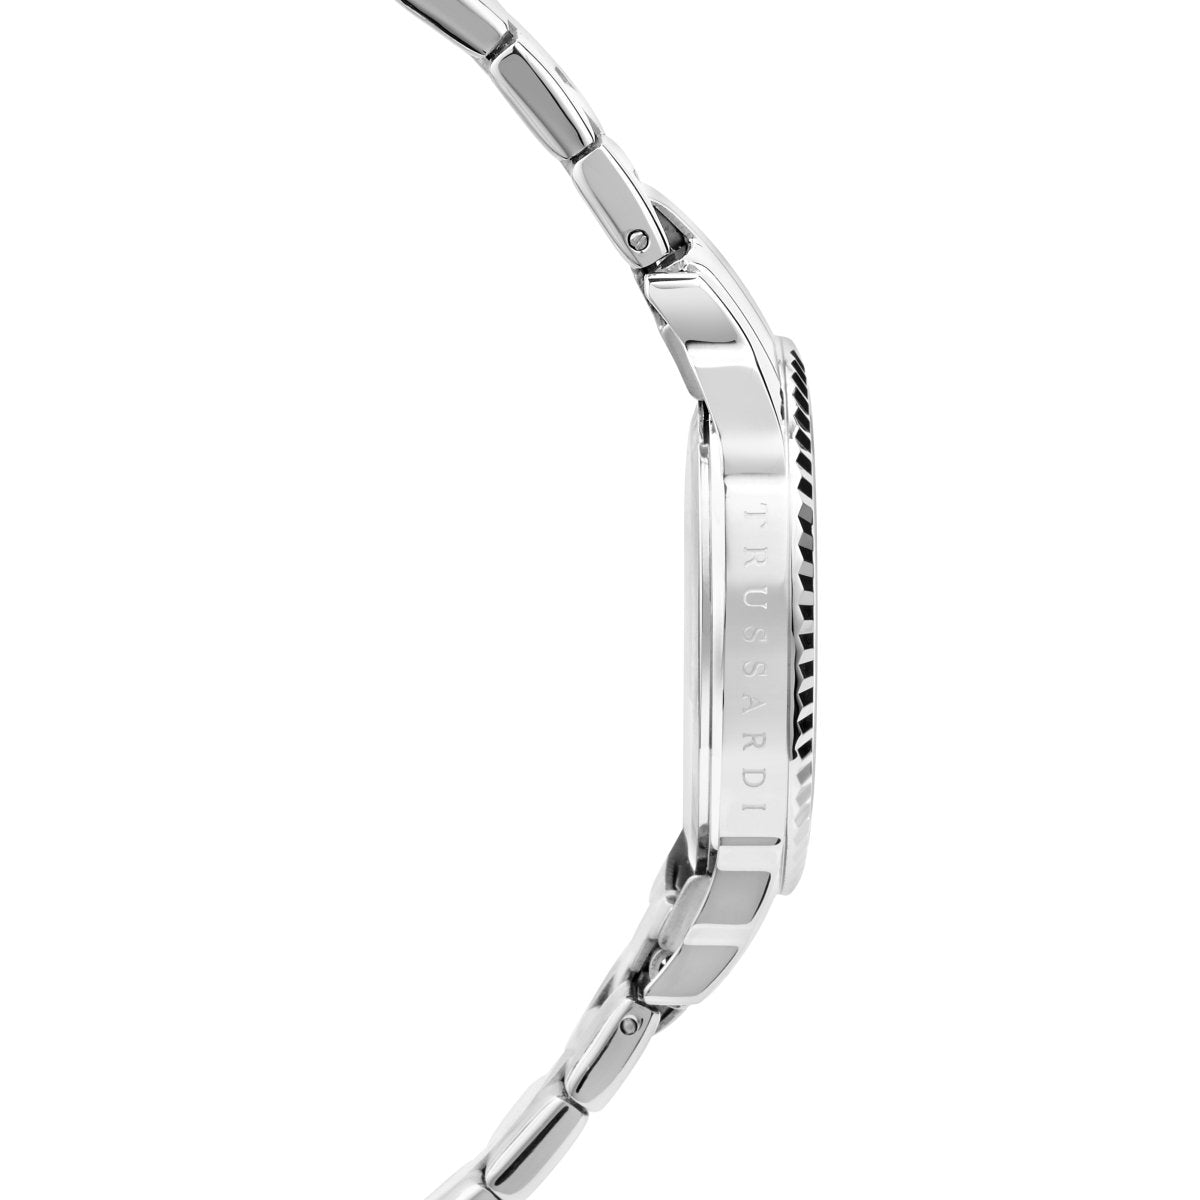 TRUSSARDI R2453144503 T-Bent Silver Stainless Steel Bracelet - Κοσμηματοπωλείο Goldy